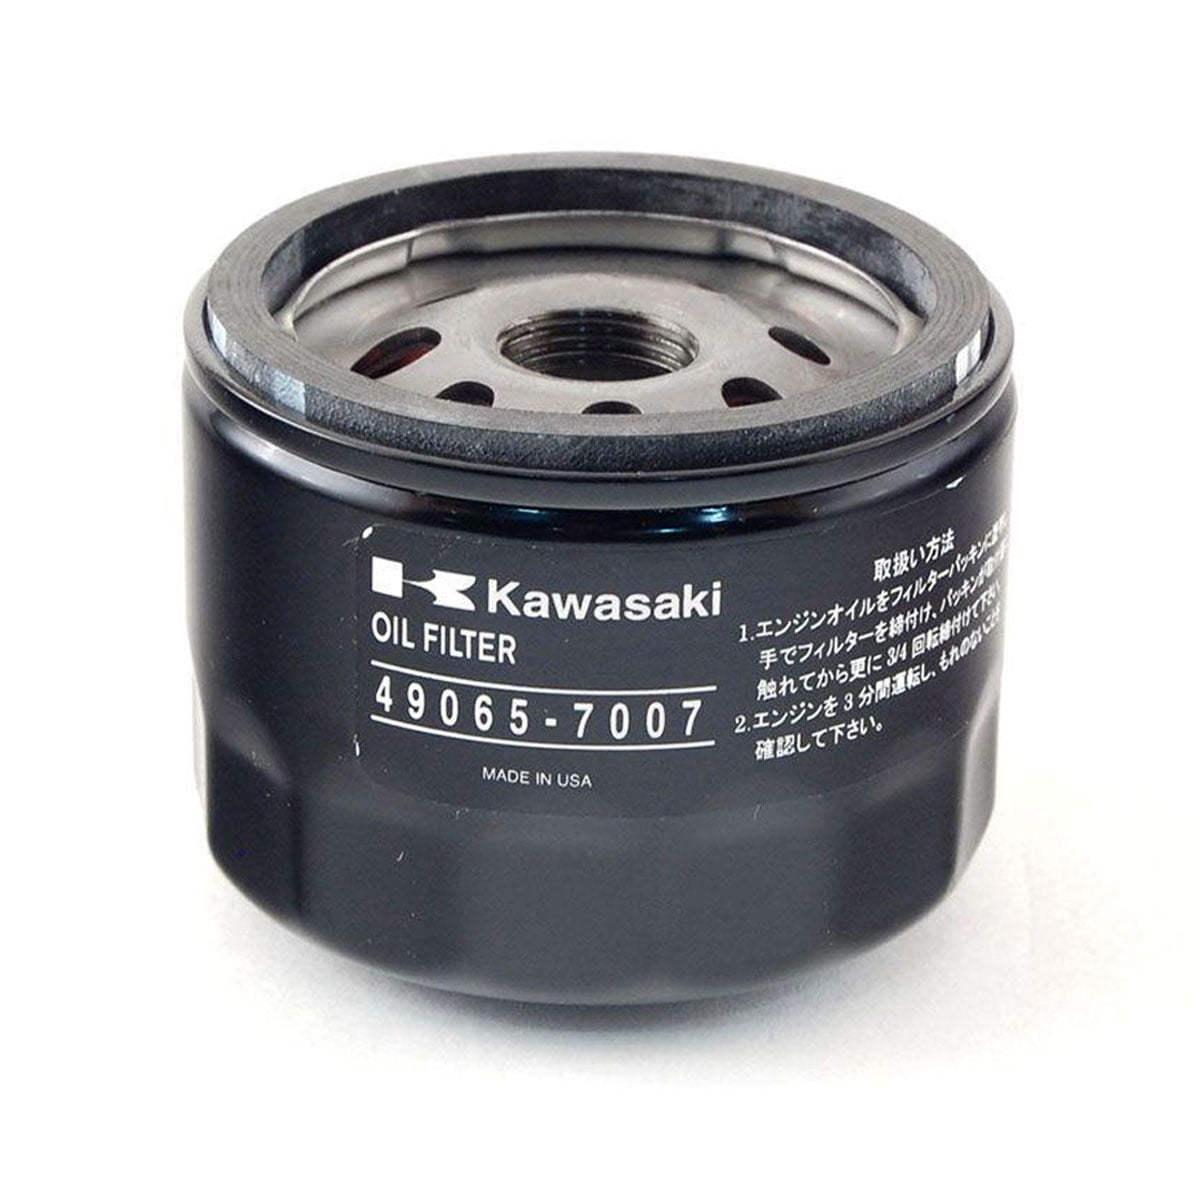 Kawasaki 49065-0721 49065-7007 John Deere AM119567 13026 Oil Filter for Mowers 